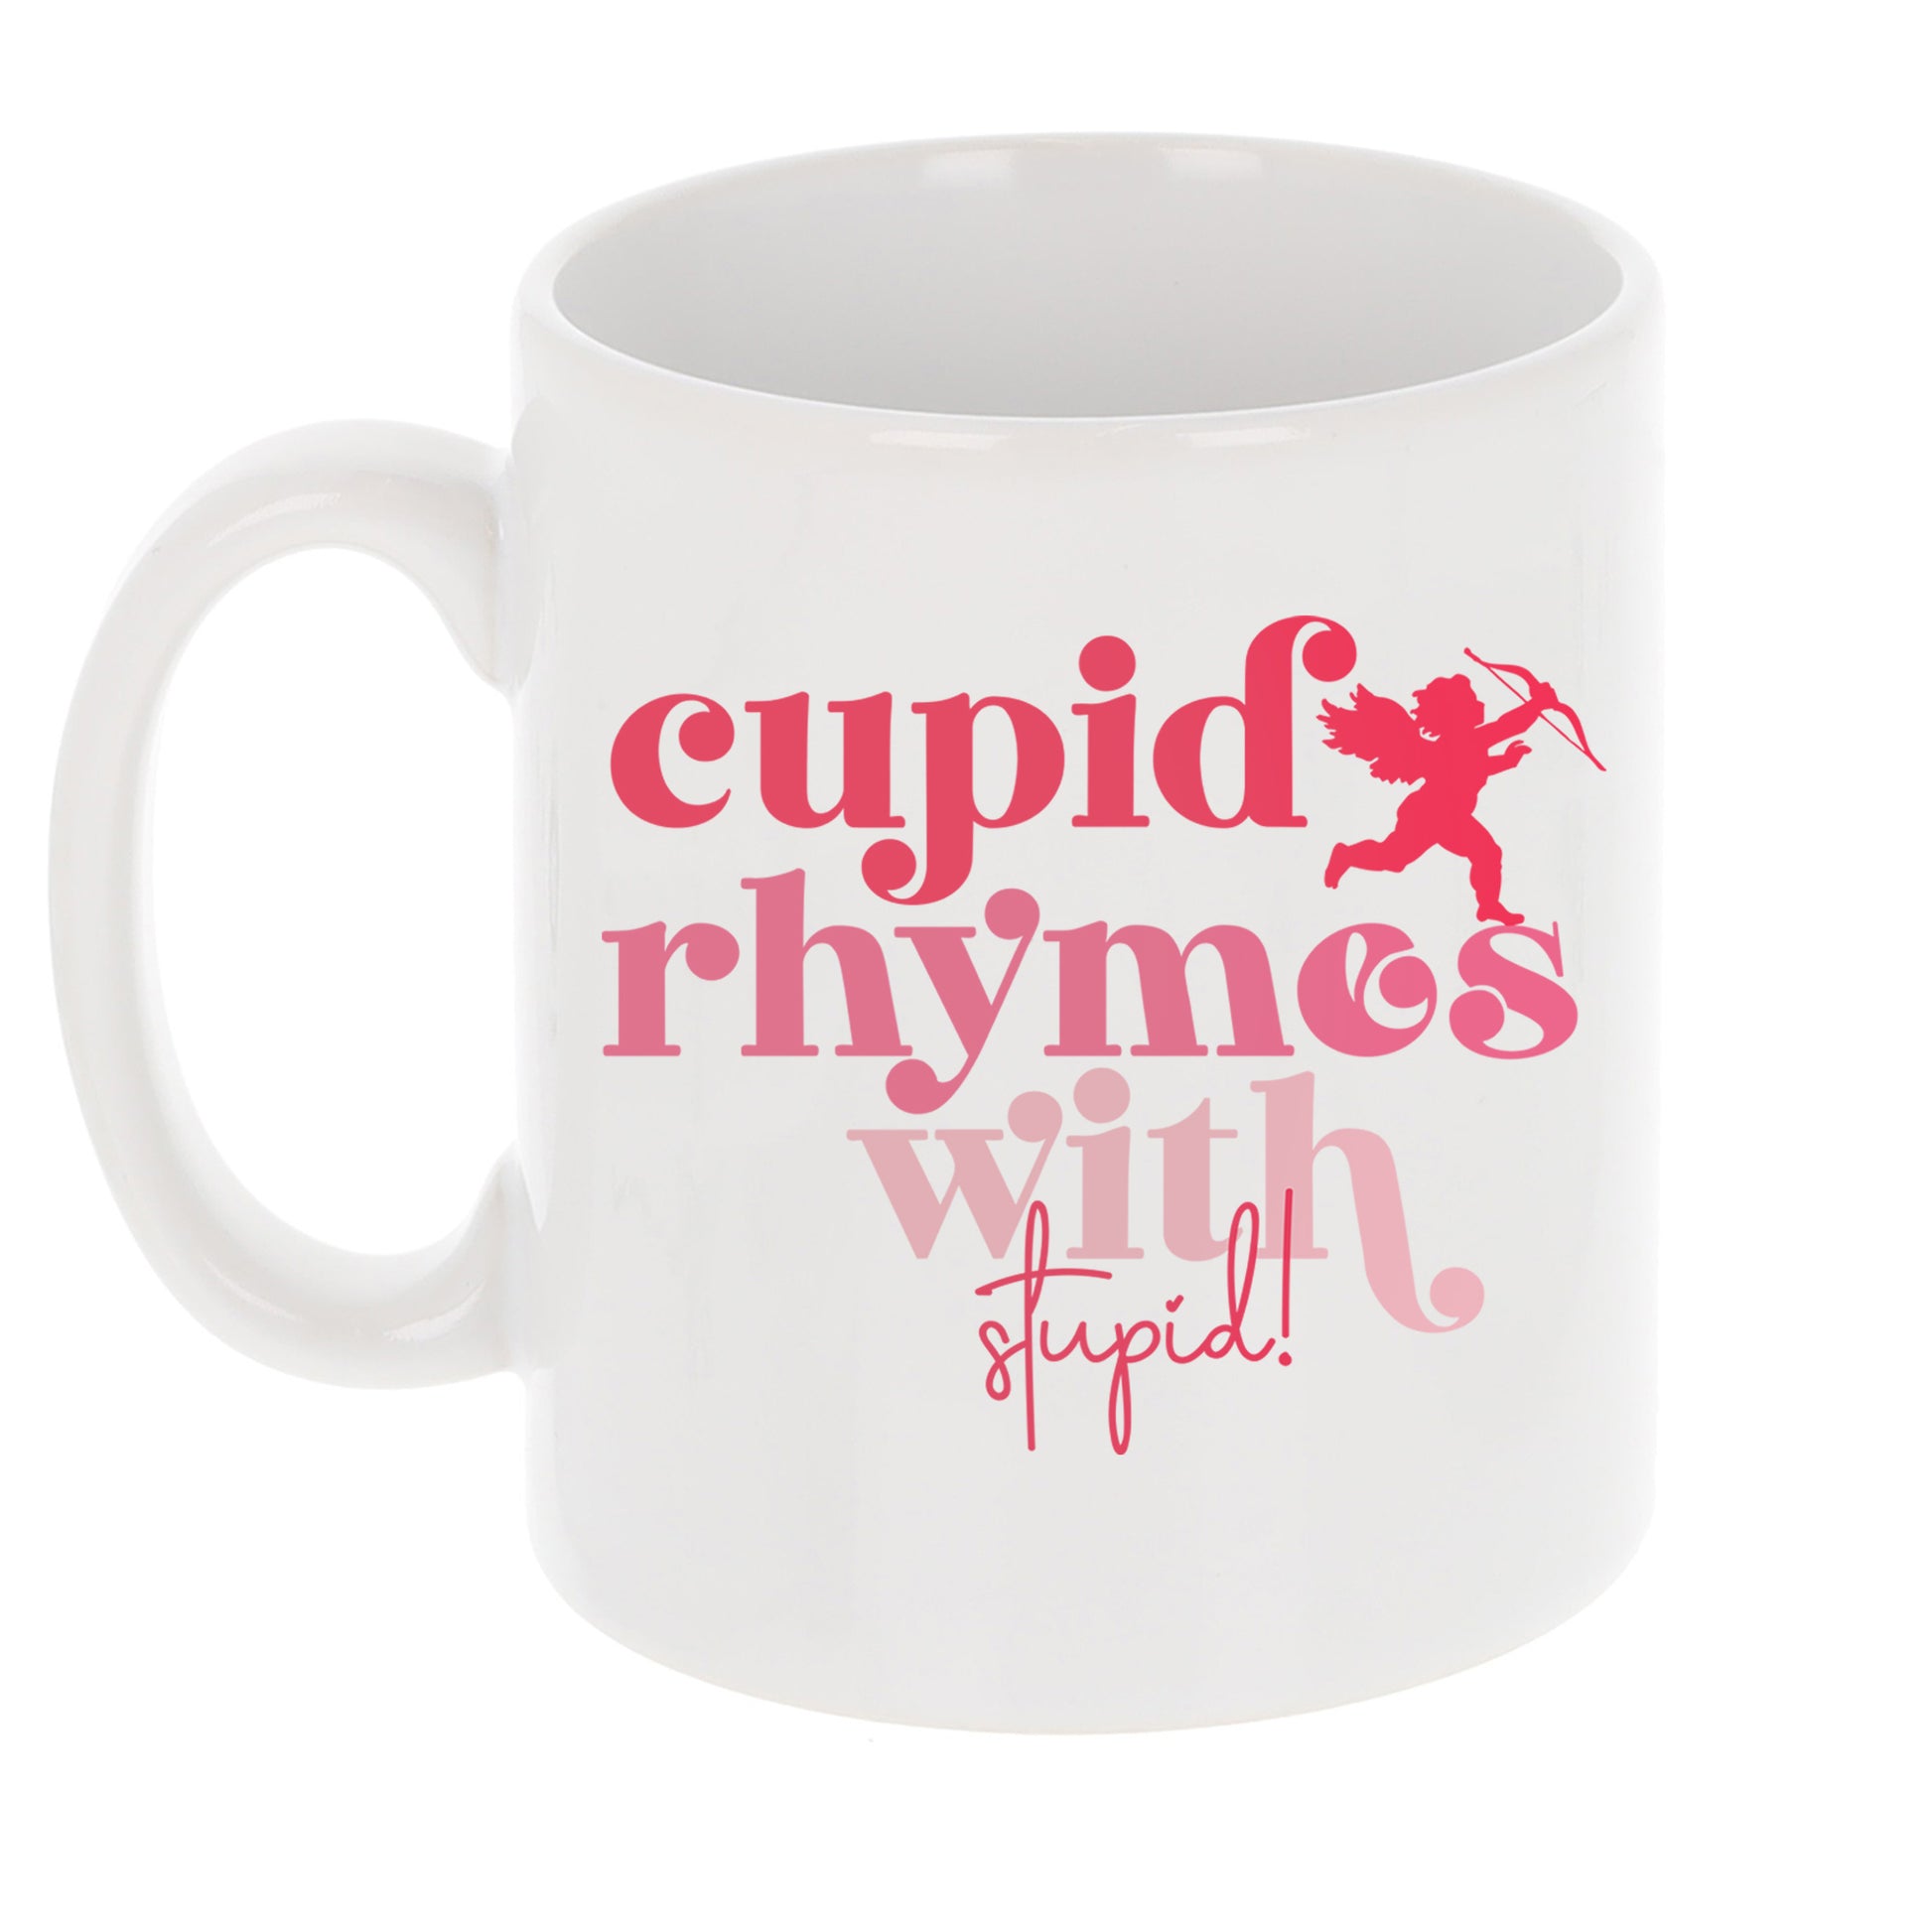 Cupid Rhymes With Stupid Mug and/or Coaster Set  - Always Looking Good - Mug On Its Own  